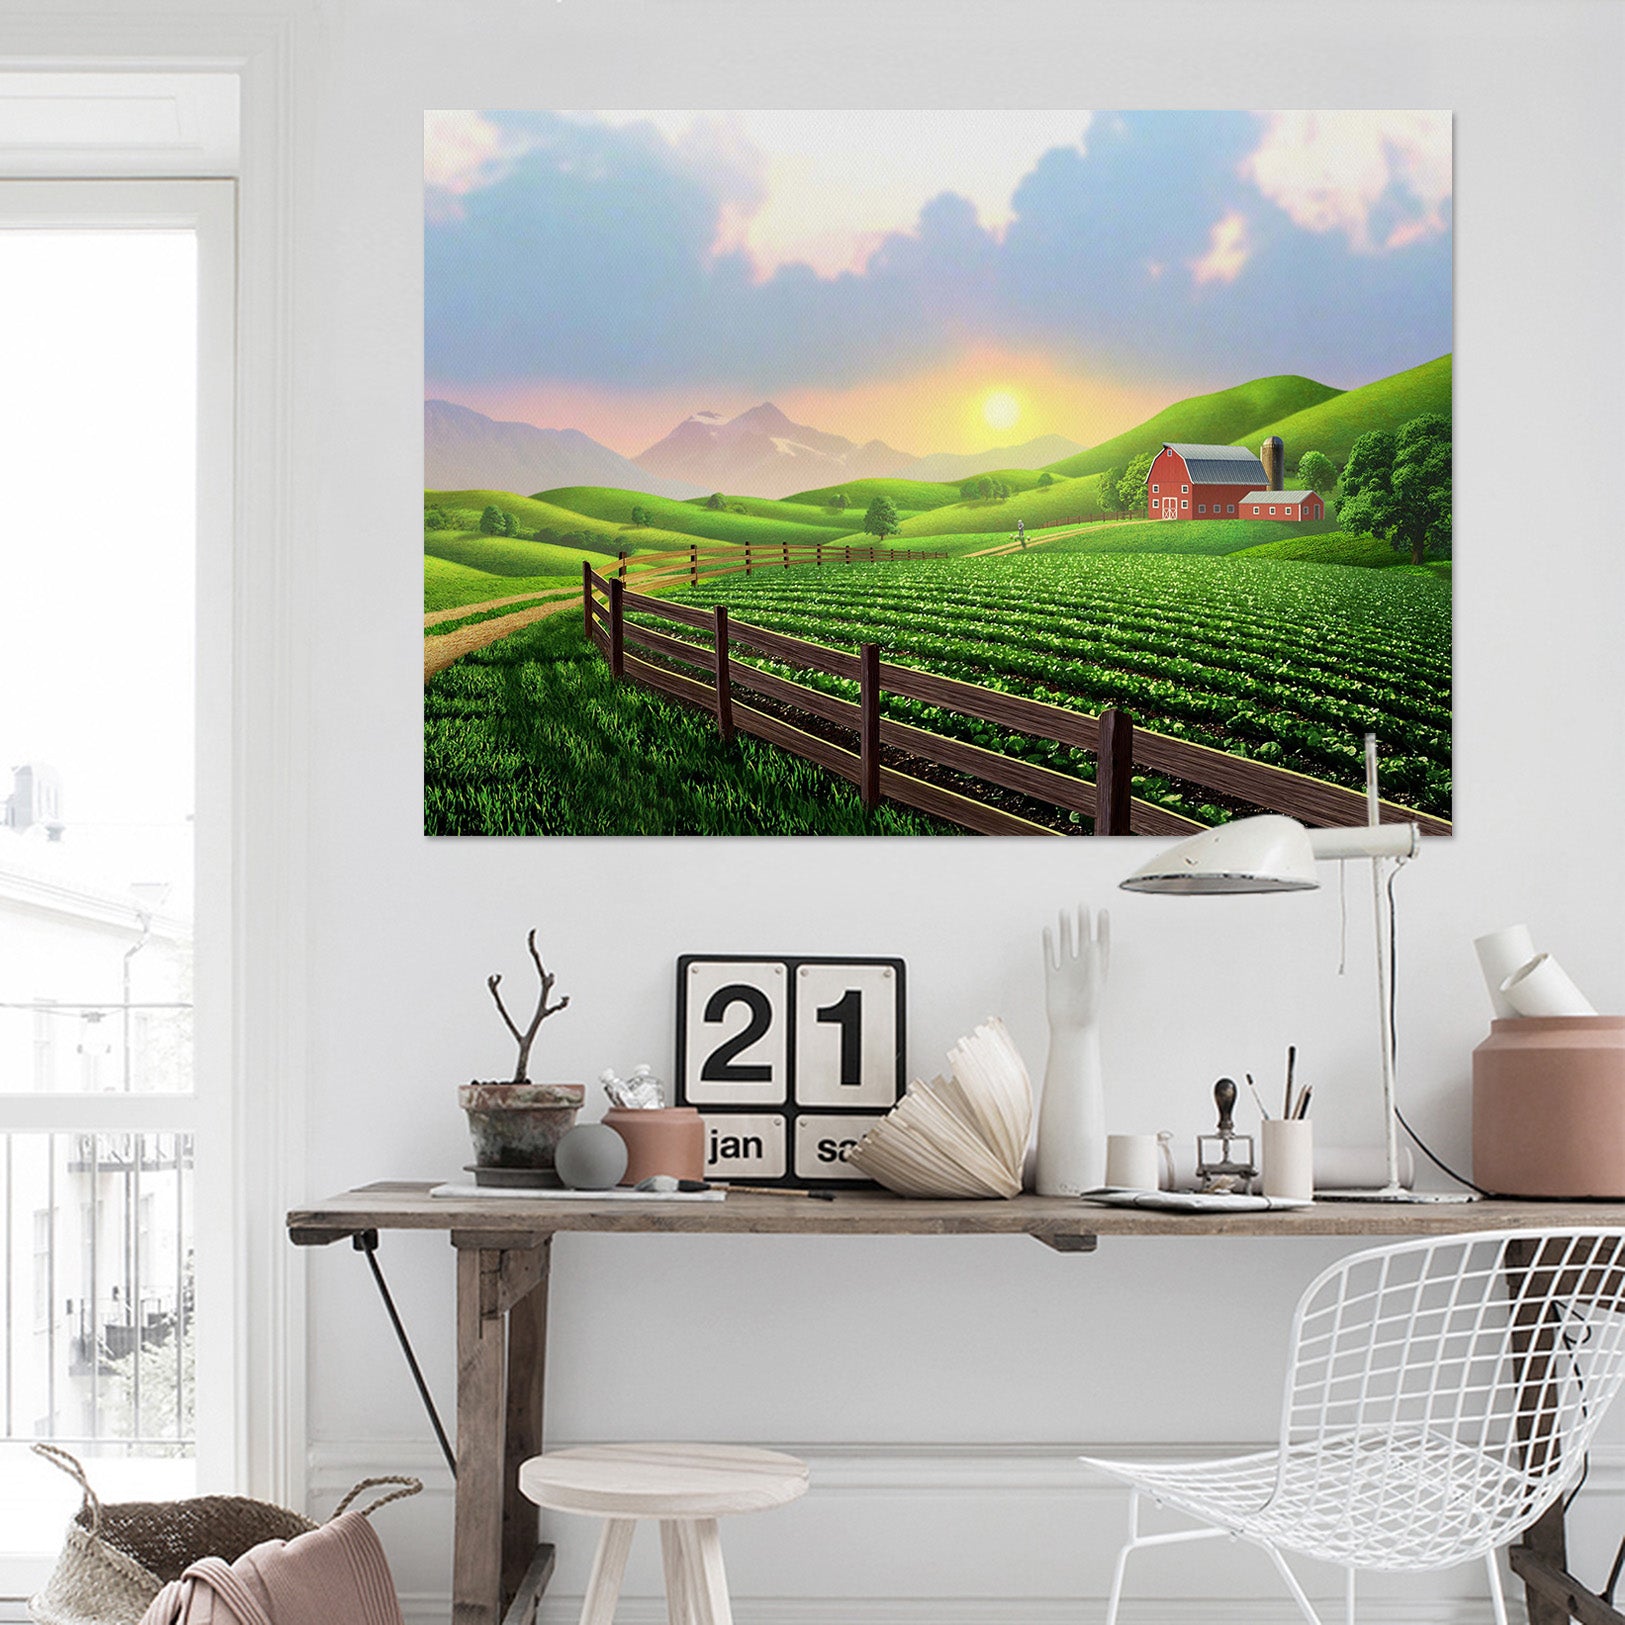 3D Happy Farm 017 Jerry LoFaro Wall Sticker